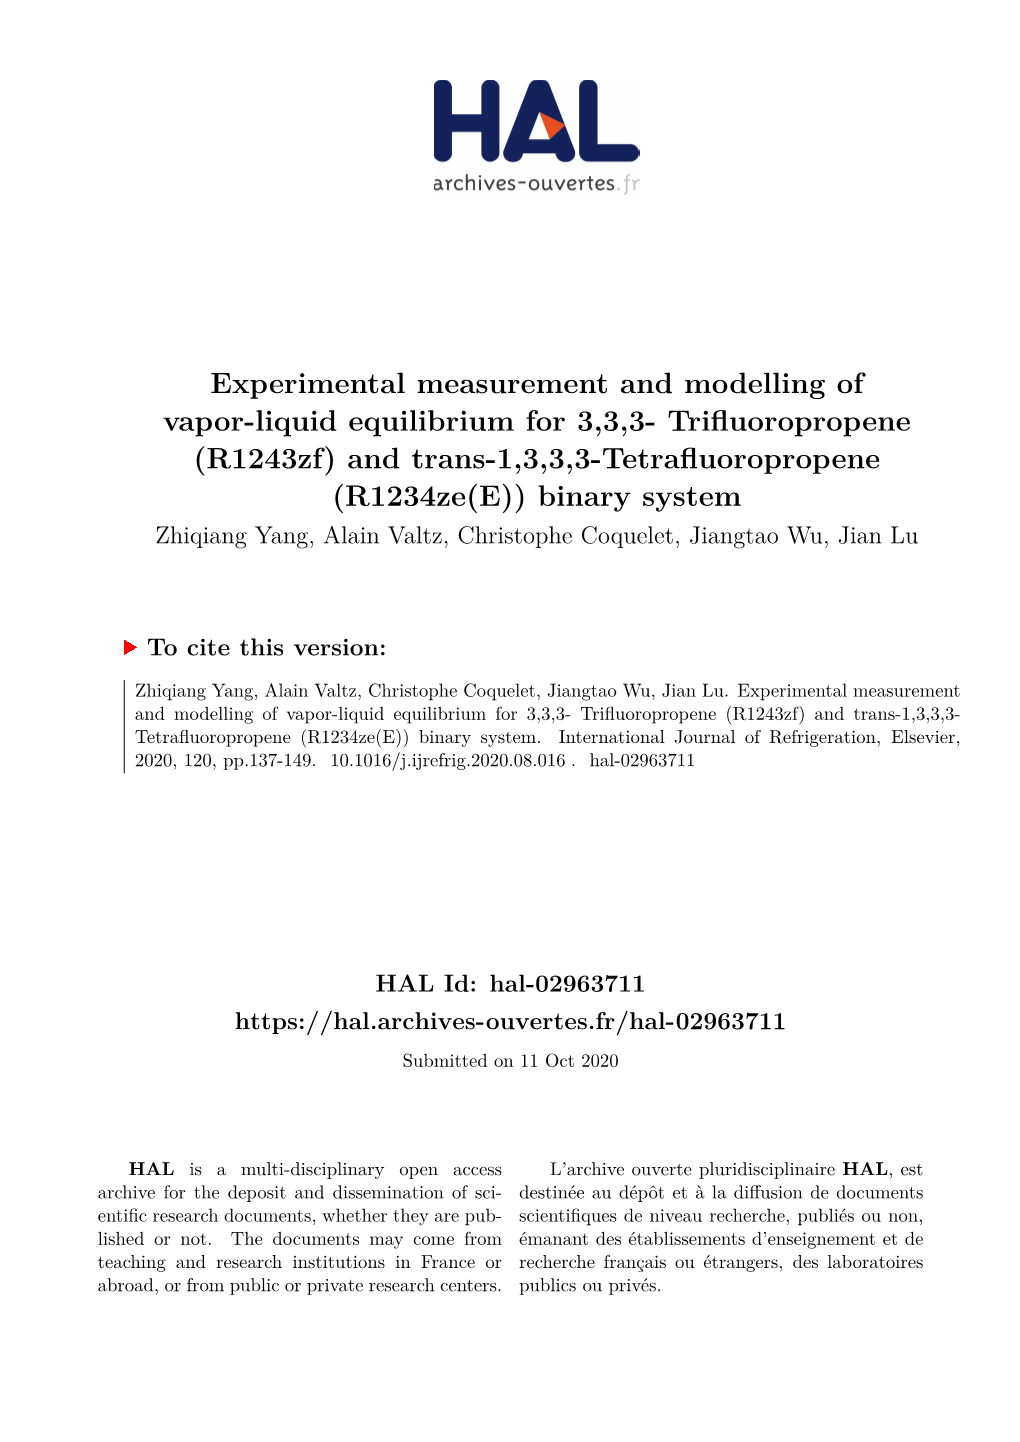 Experimental Measurement and Modelling of Vapor-Liquid